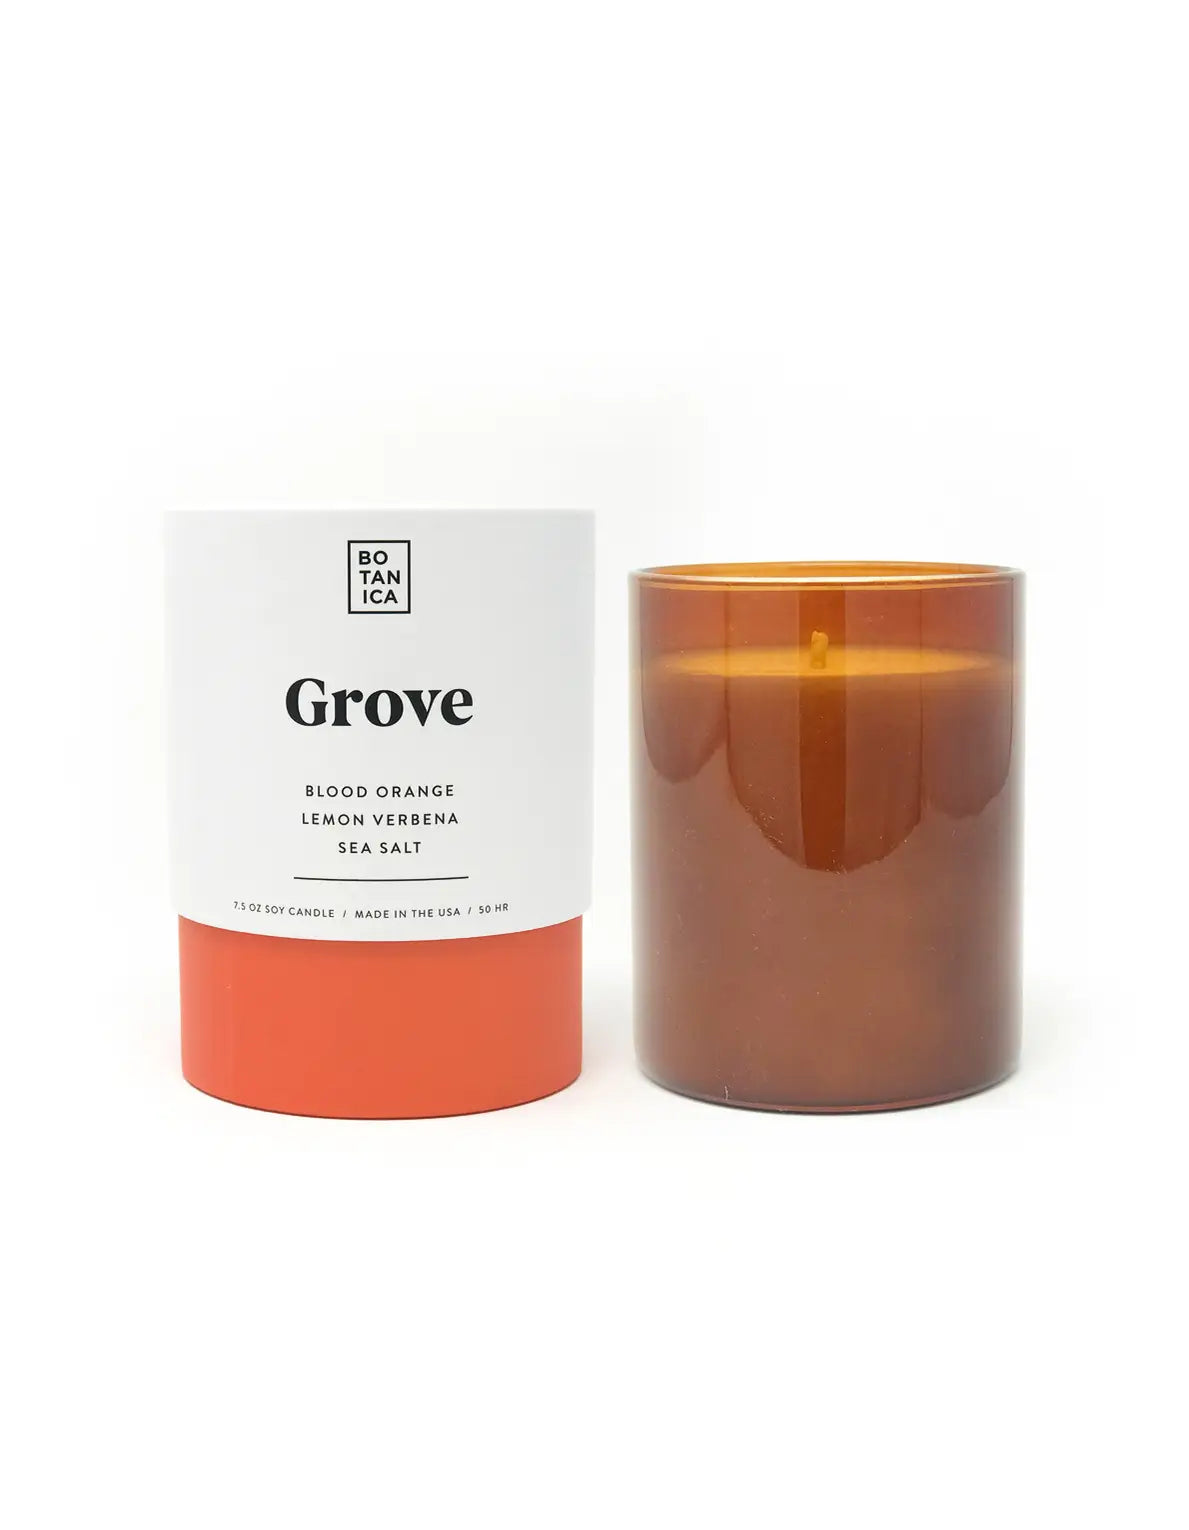 Grove Medium Candle